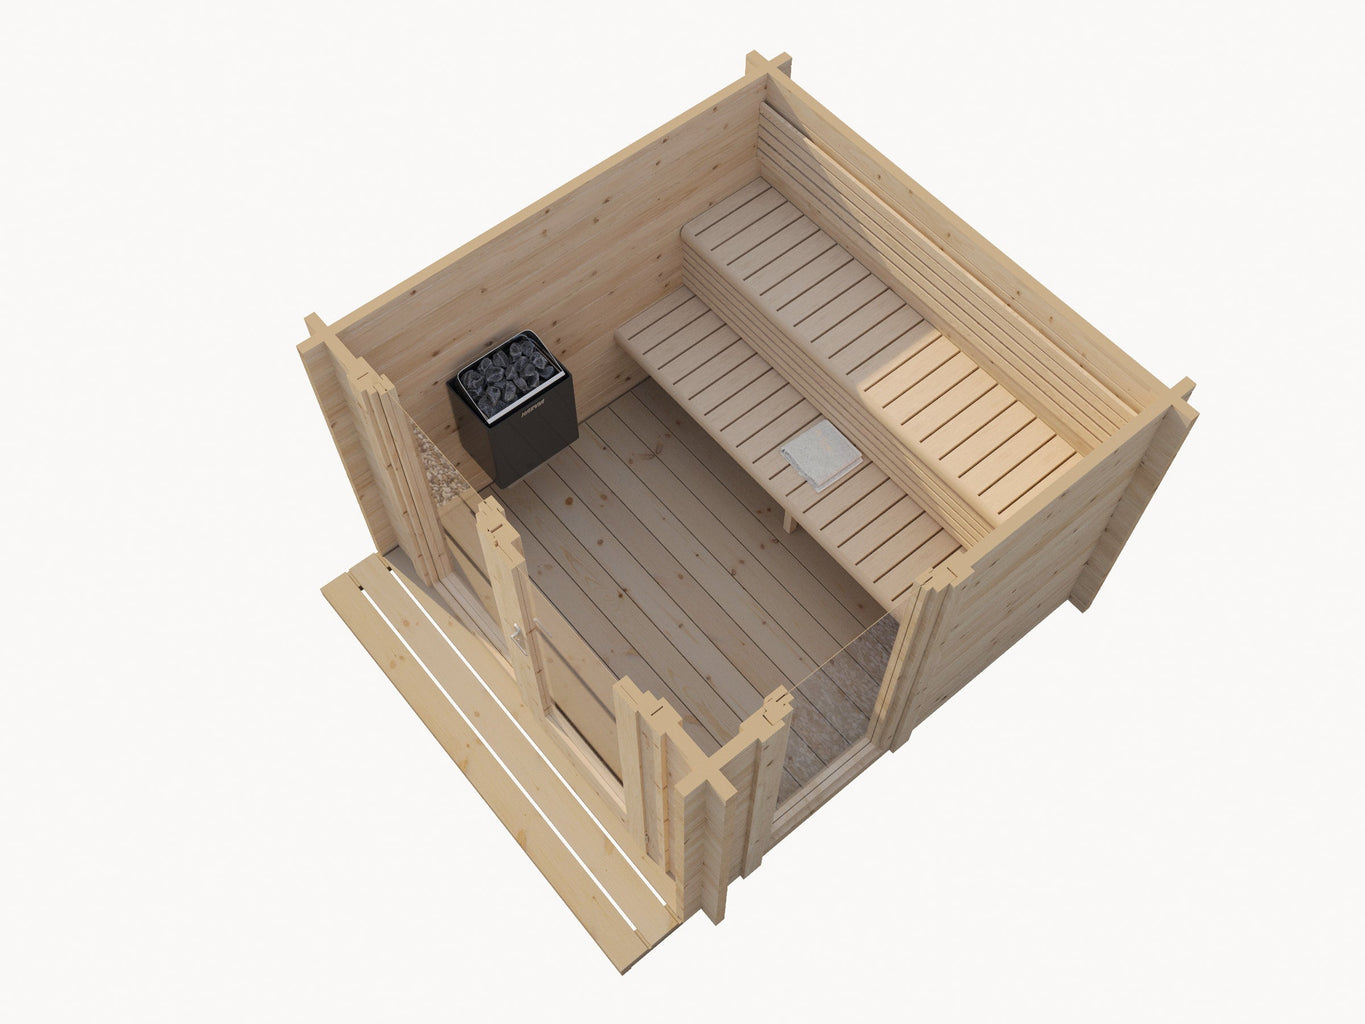 Sauna Life SaunaLife 6-Person Traditional Outdoor Sauna | Model G4 SL-MODELG4 Traditional Sauna Topture